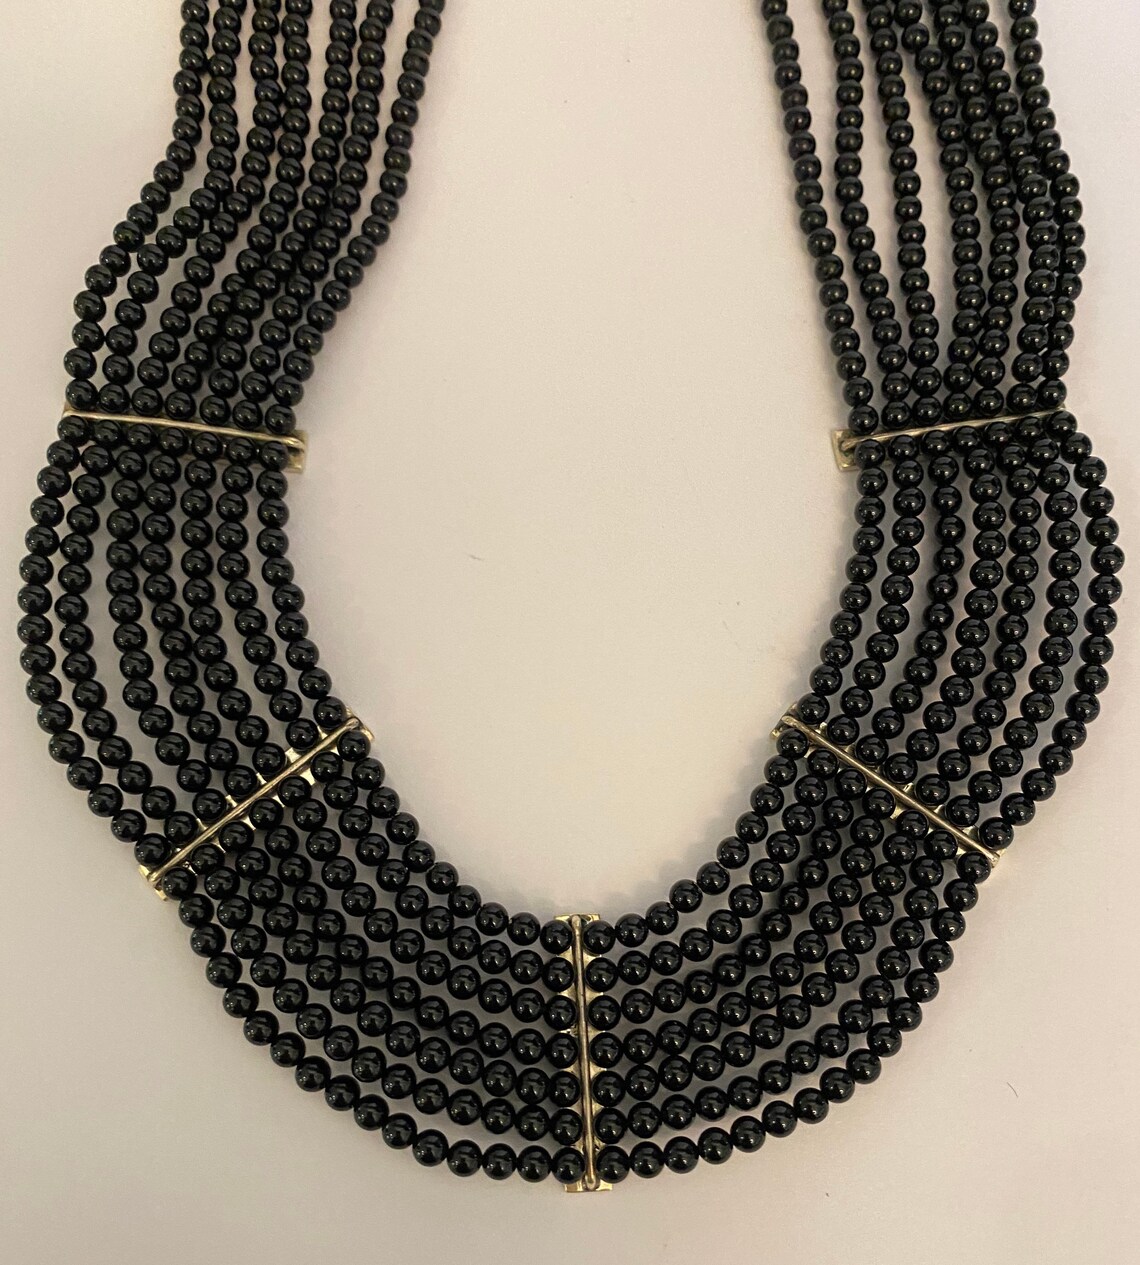 Striking 7 Strand Black Onyx Bead Necklace with Marcasite | Etsy